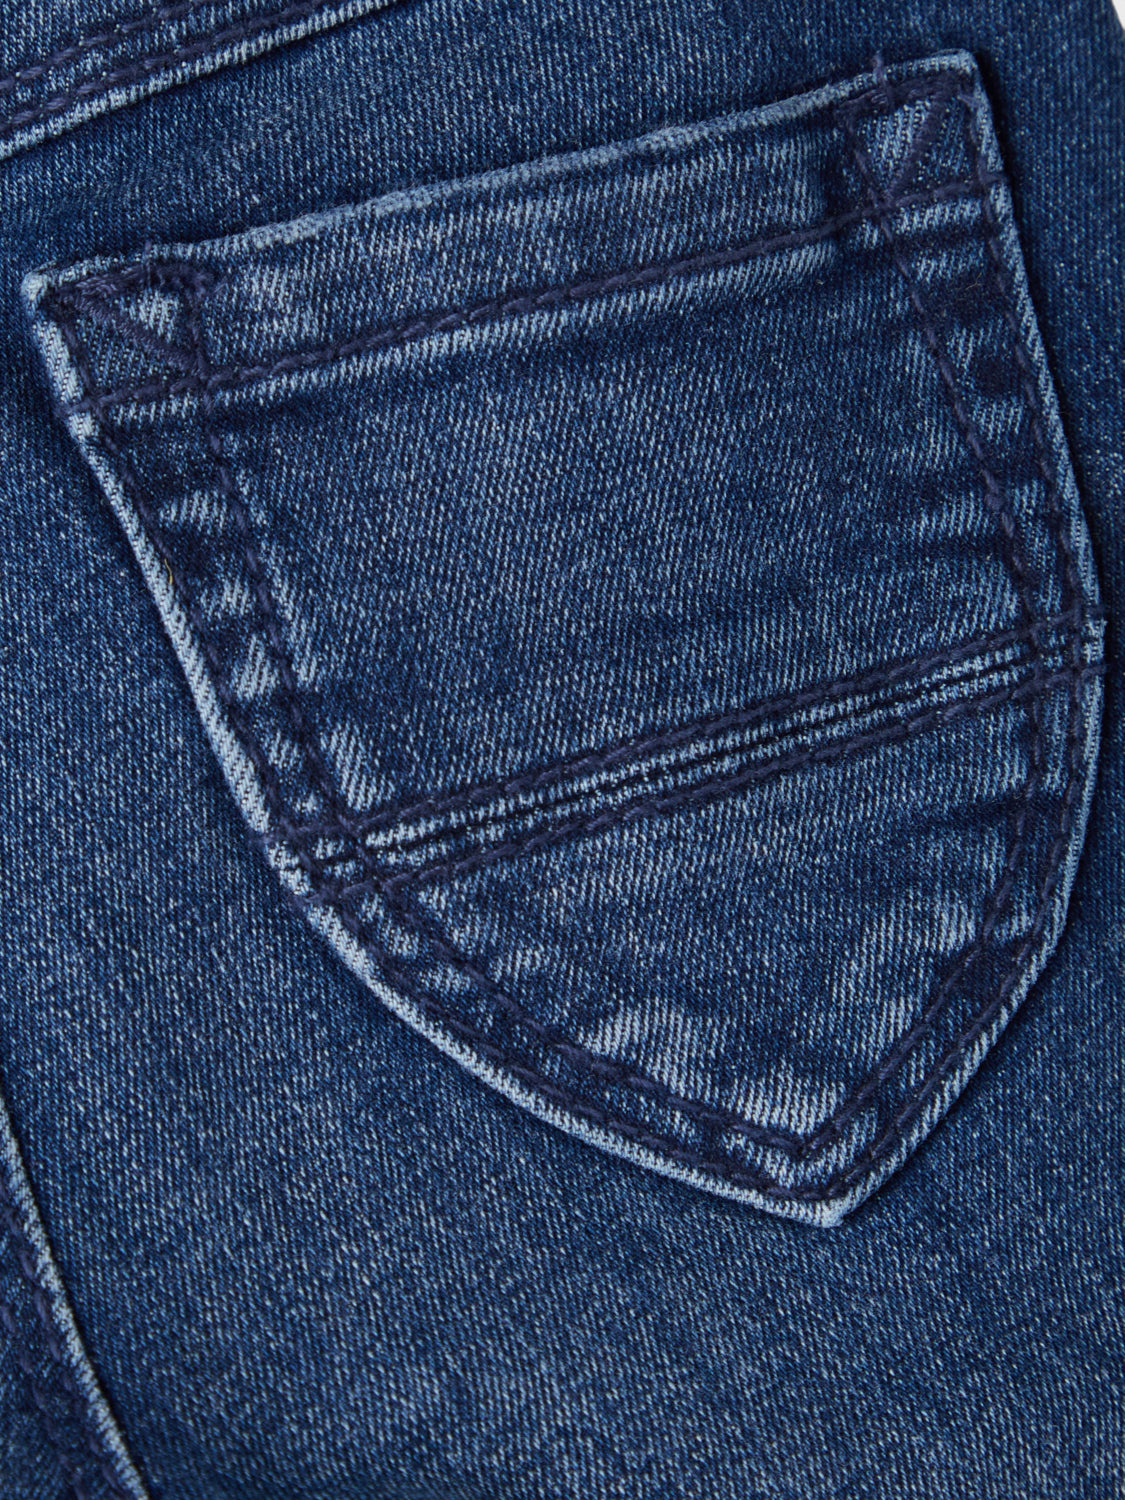 NMFPOLLY Jeans - Dark Blue Denim